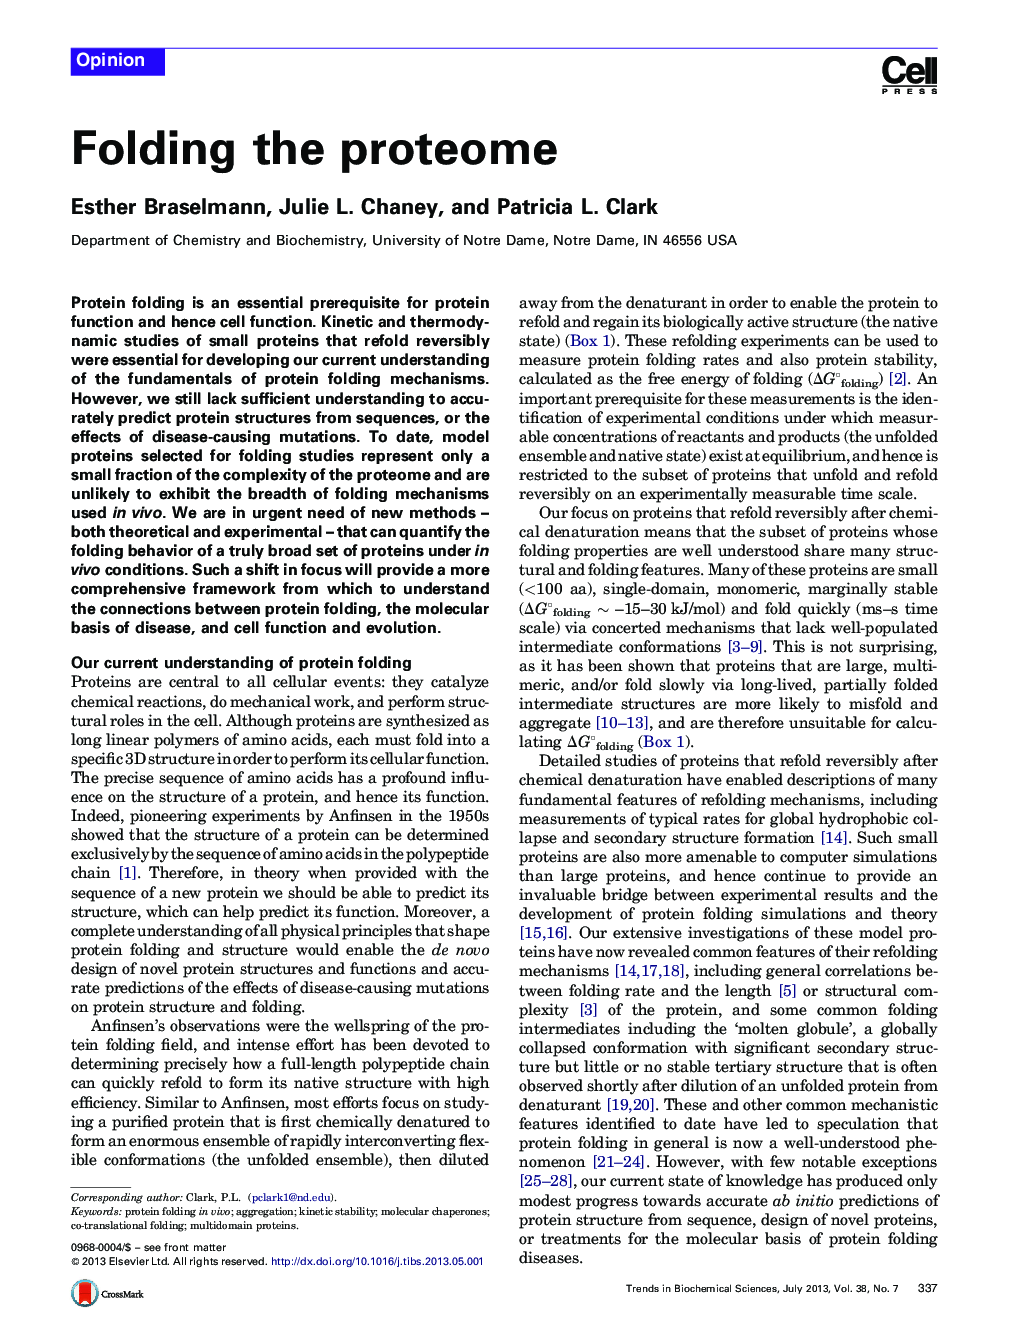 Folding the proteome